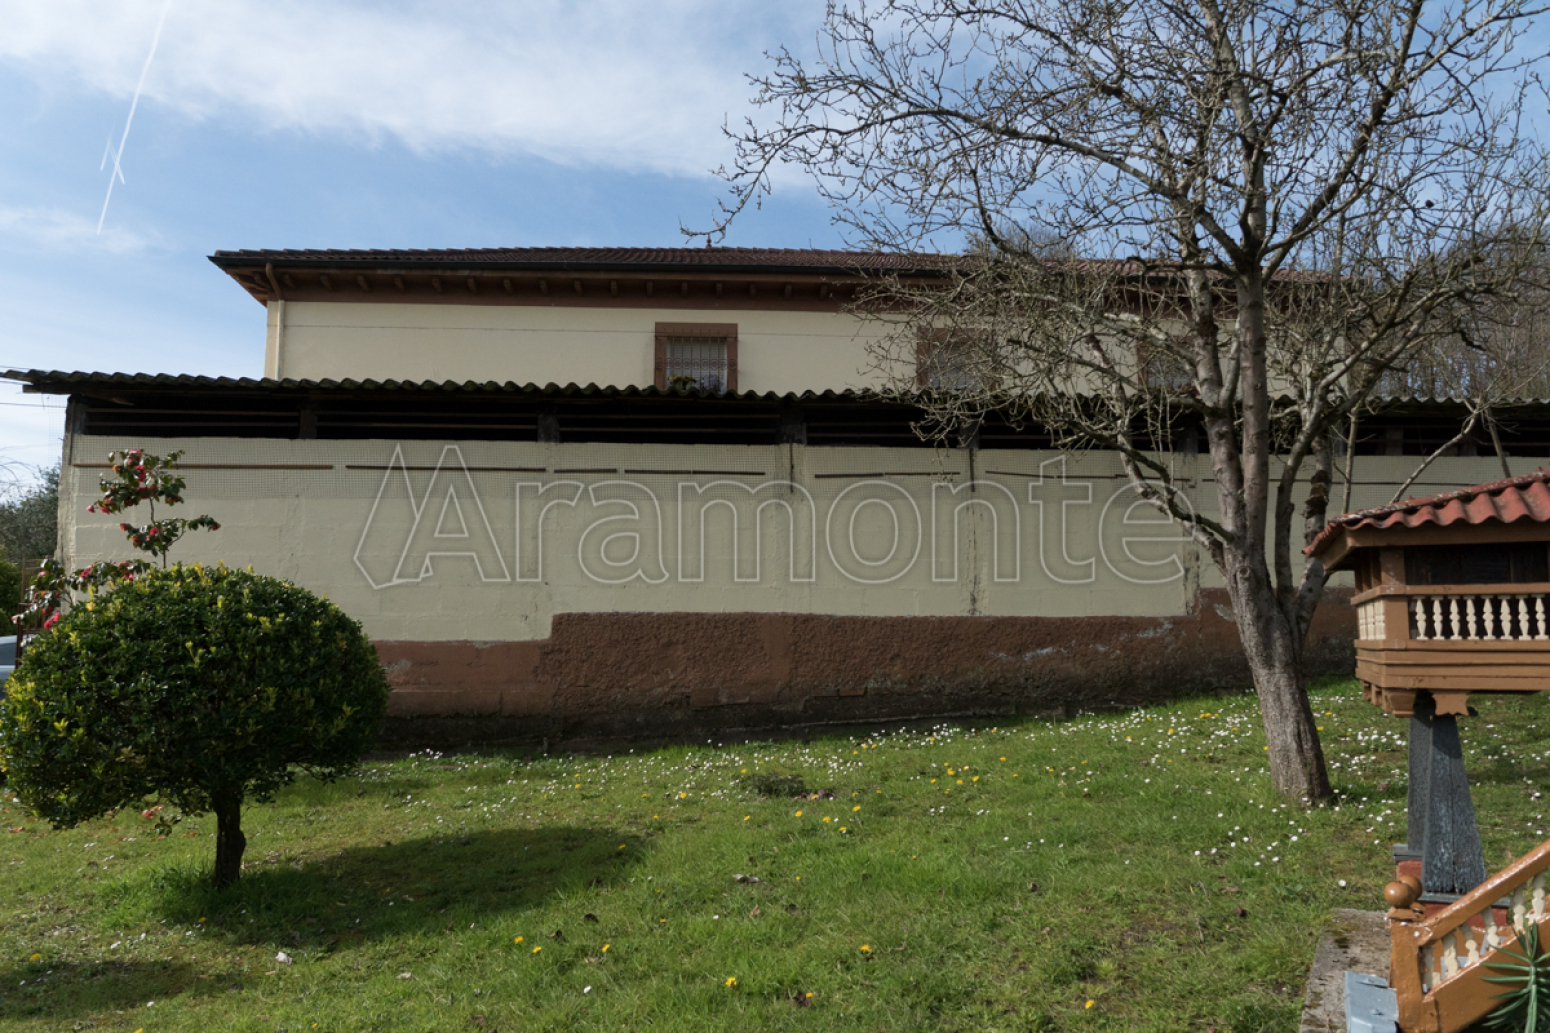 Casas o chalets-Venta-Oviedo-669694-Foto-21